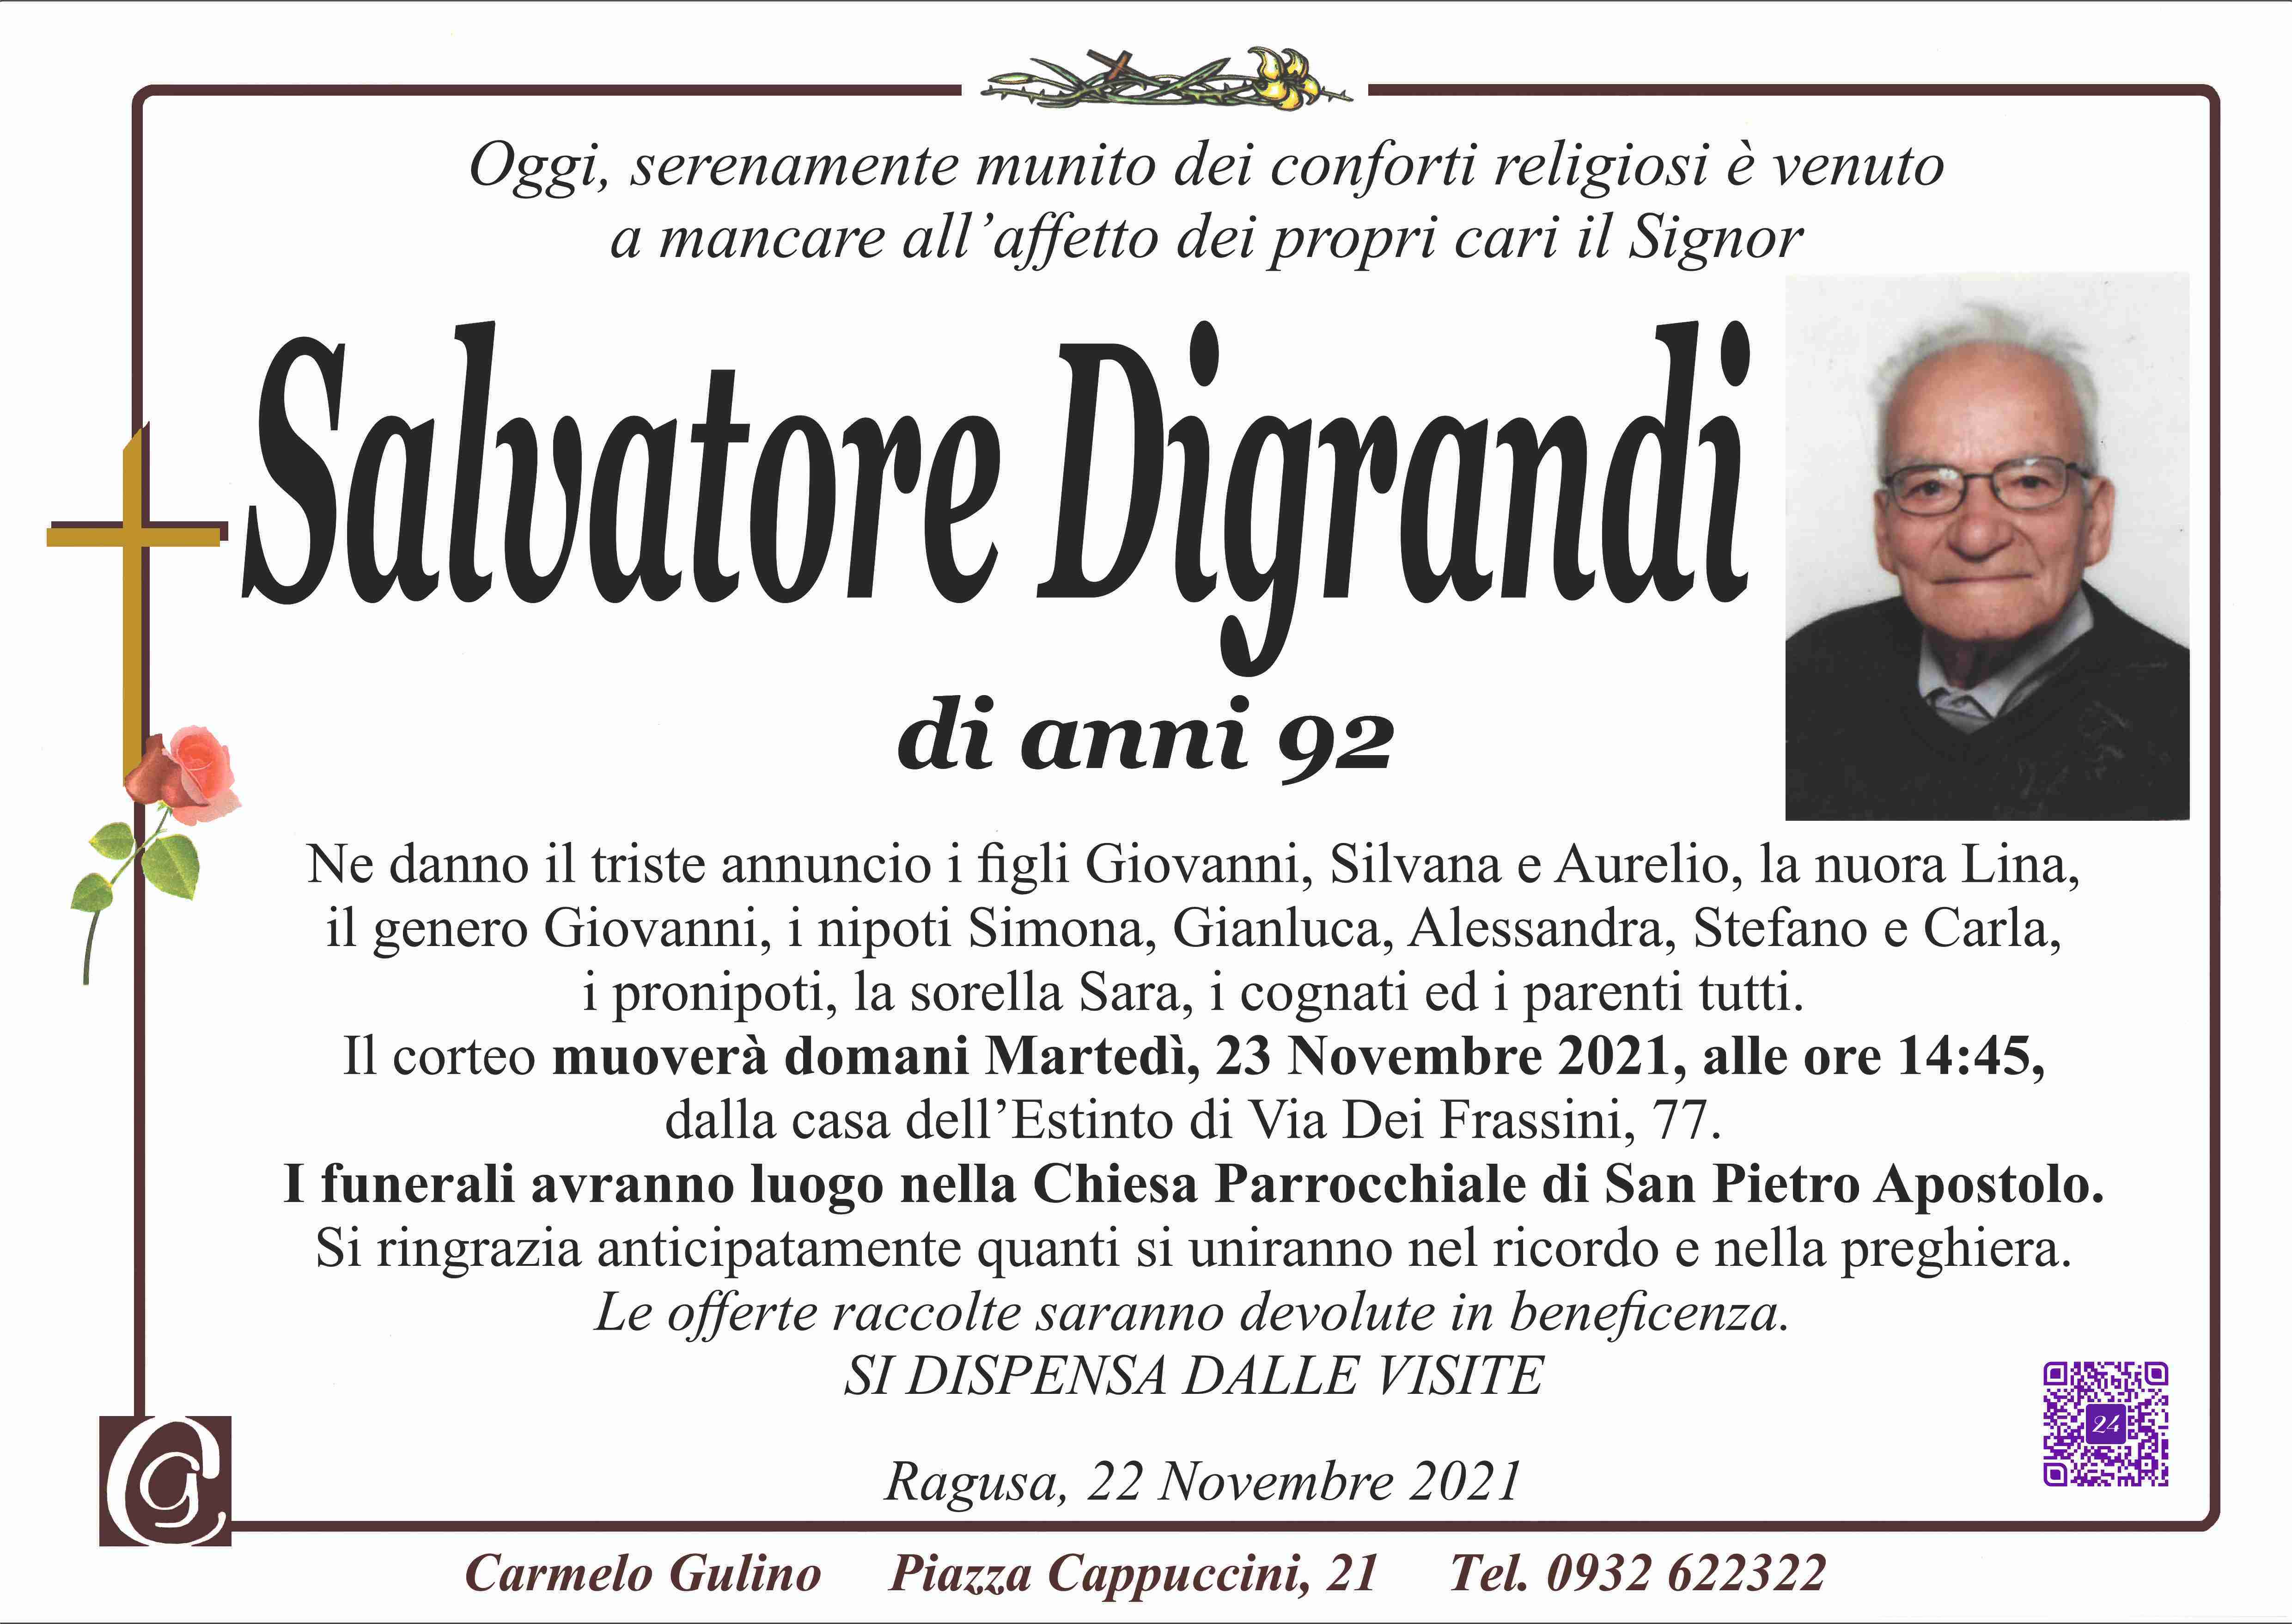 Salvatore Digrandi